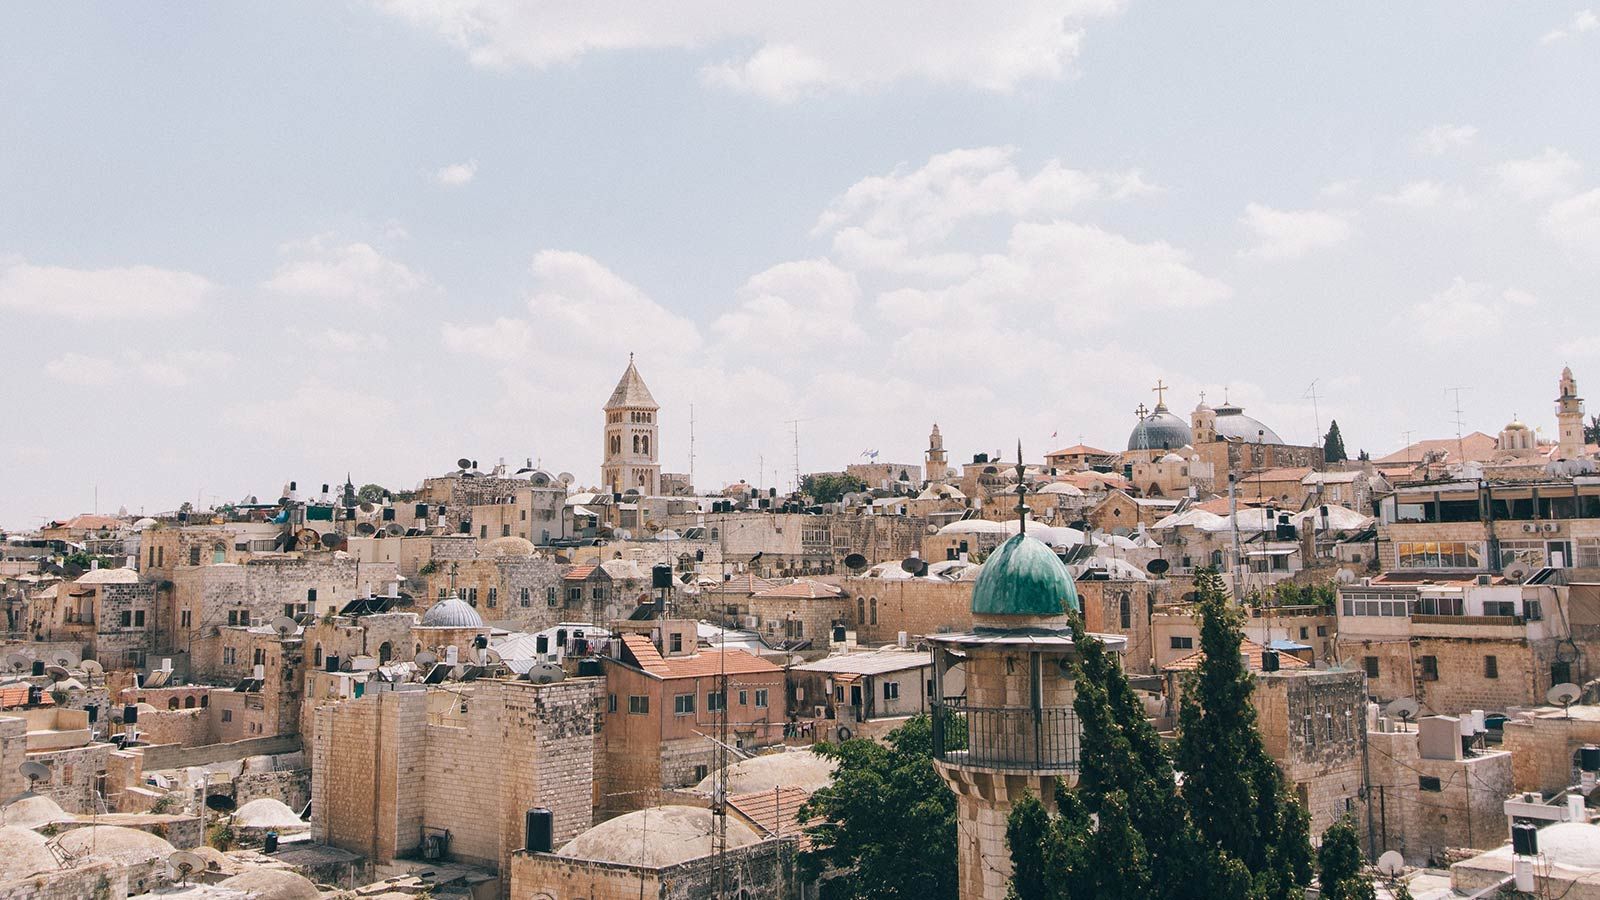  jerusalem israel city view